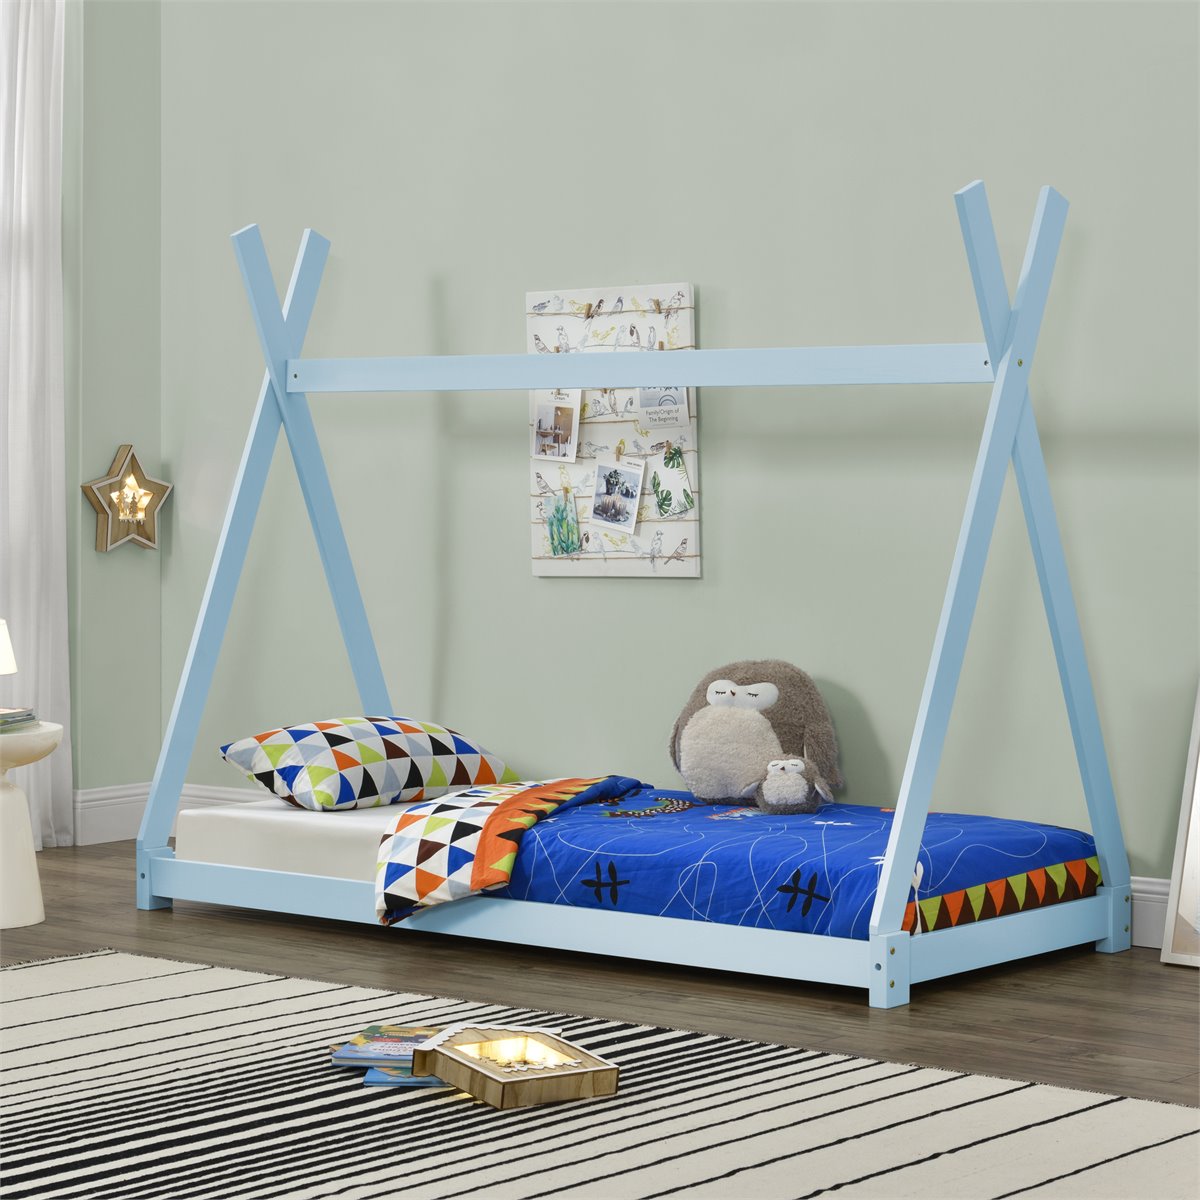 Cama infantil Onejda - Estructura tipi de madera pino - 200 x 90 cm - Azul [ en.casa] - Conforama